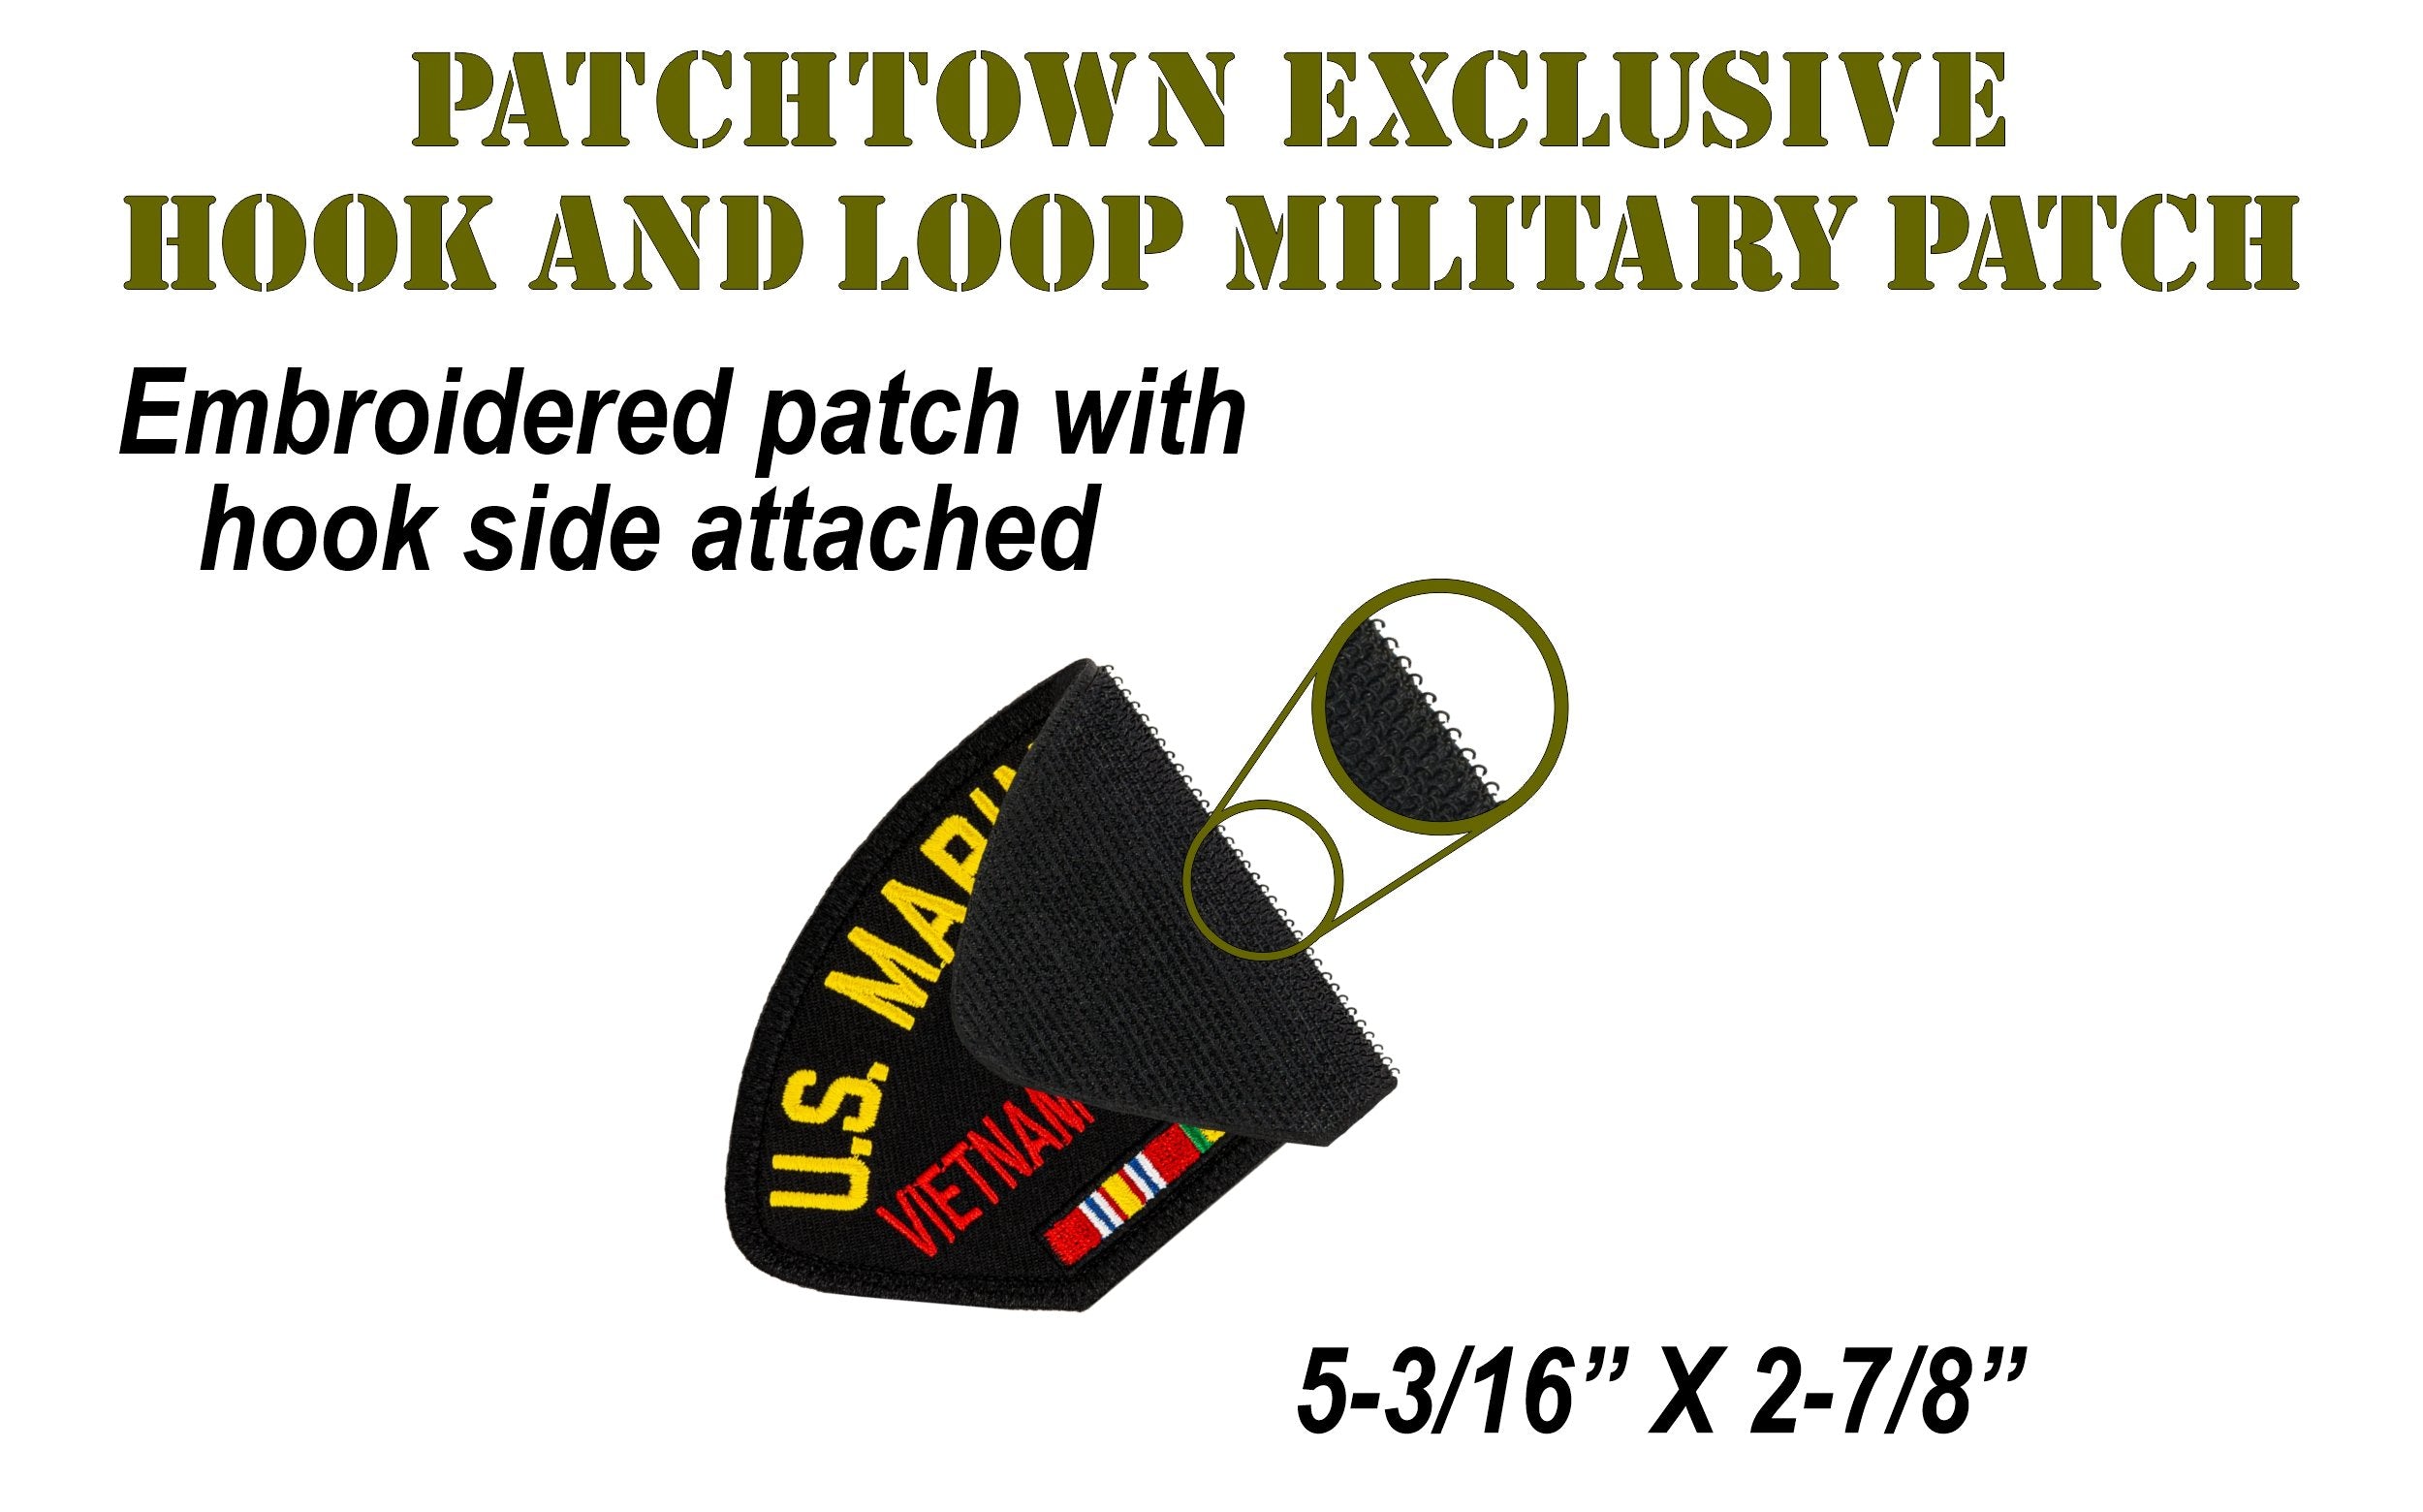 US Marine Corps Vietnam War Veteran Embroidered Patch 5 3/16" x 2 5/8"